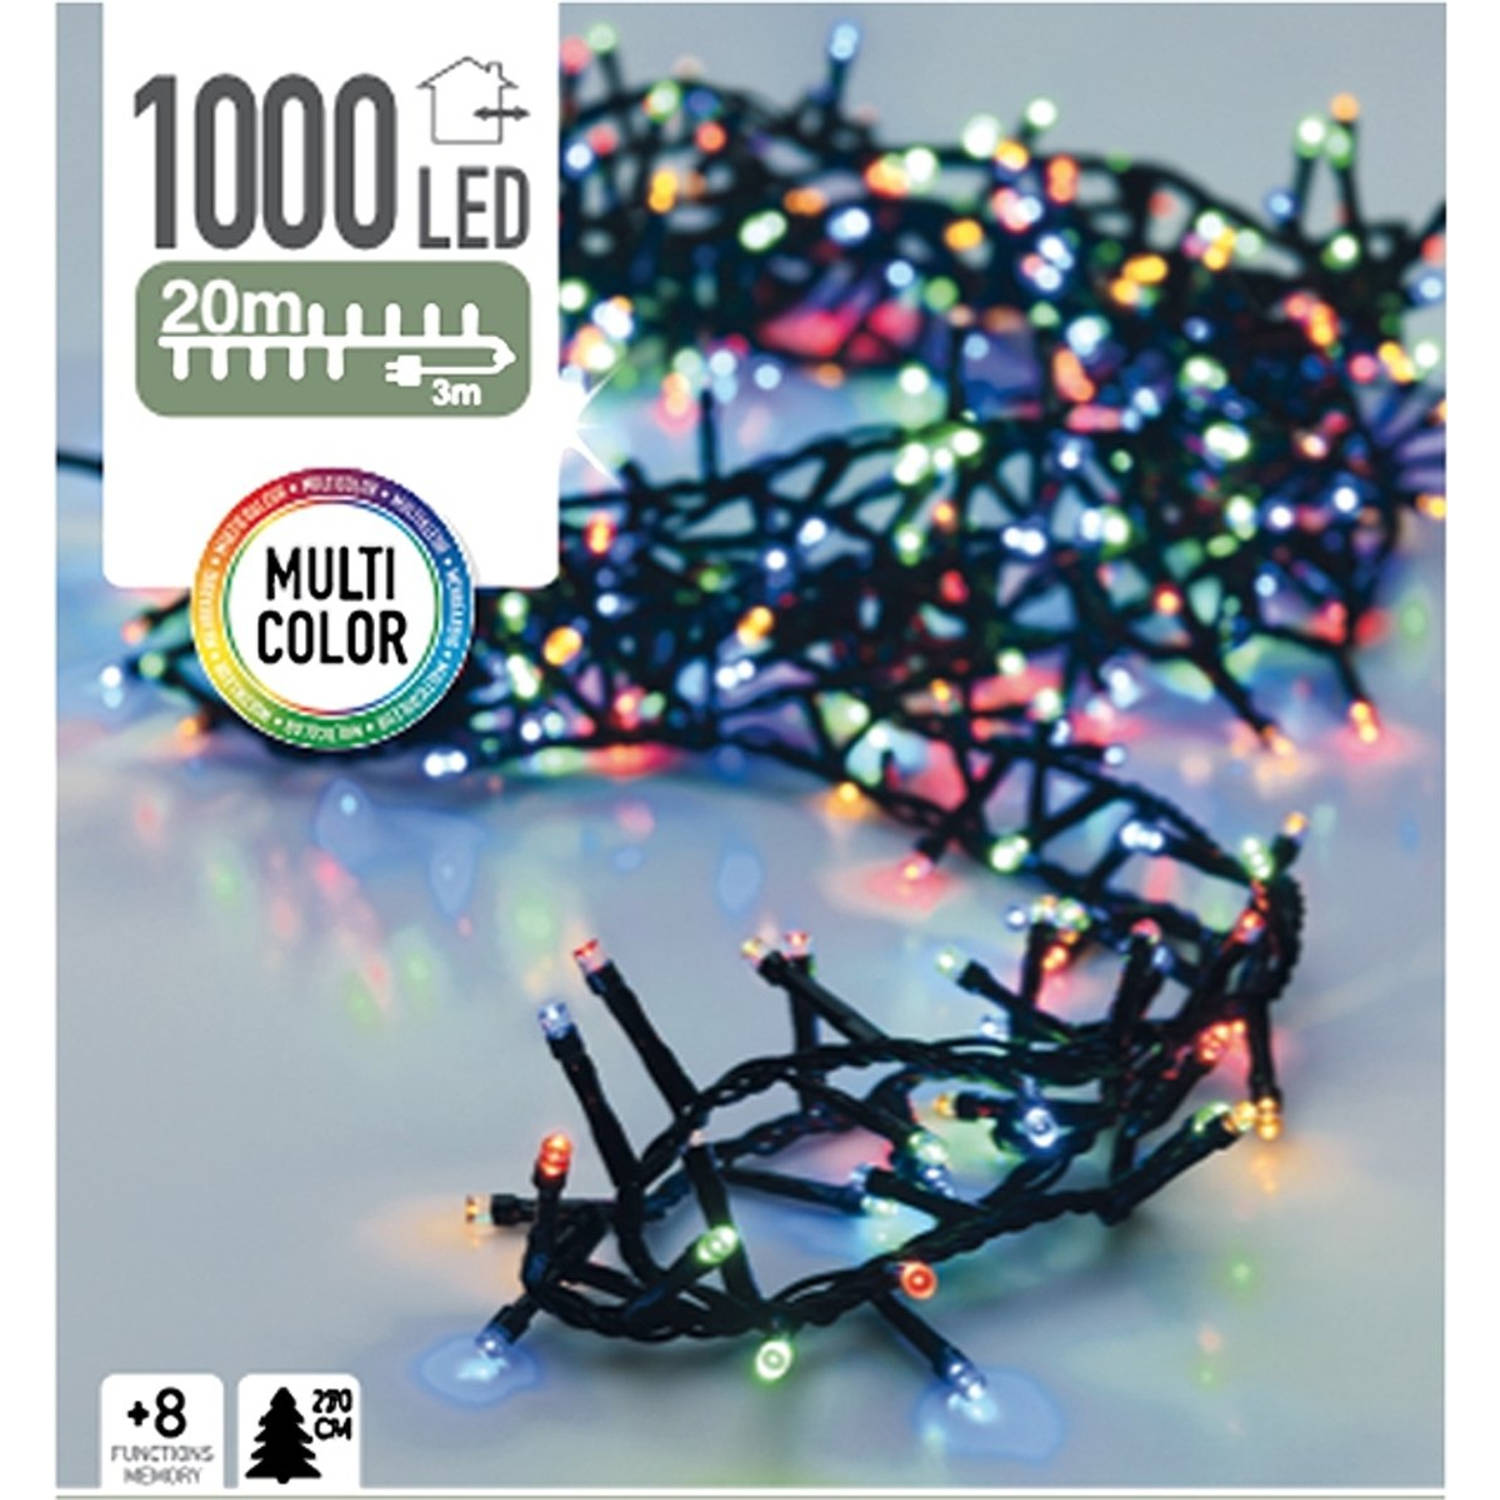 GreenWire Microcluster lichtslinger 1000 Led lampjes gekleurd, 20 meter